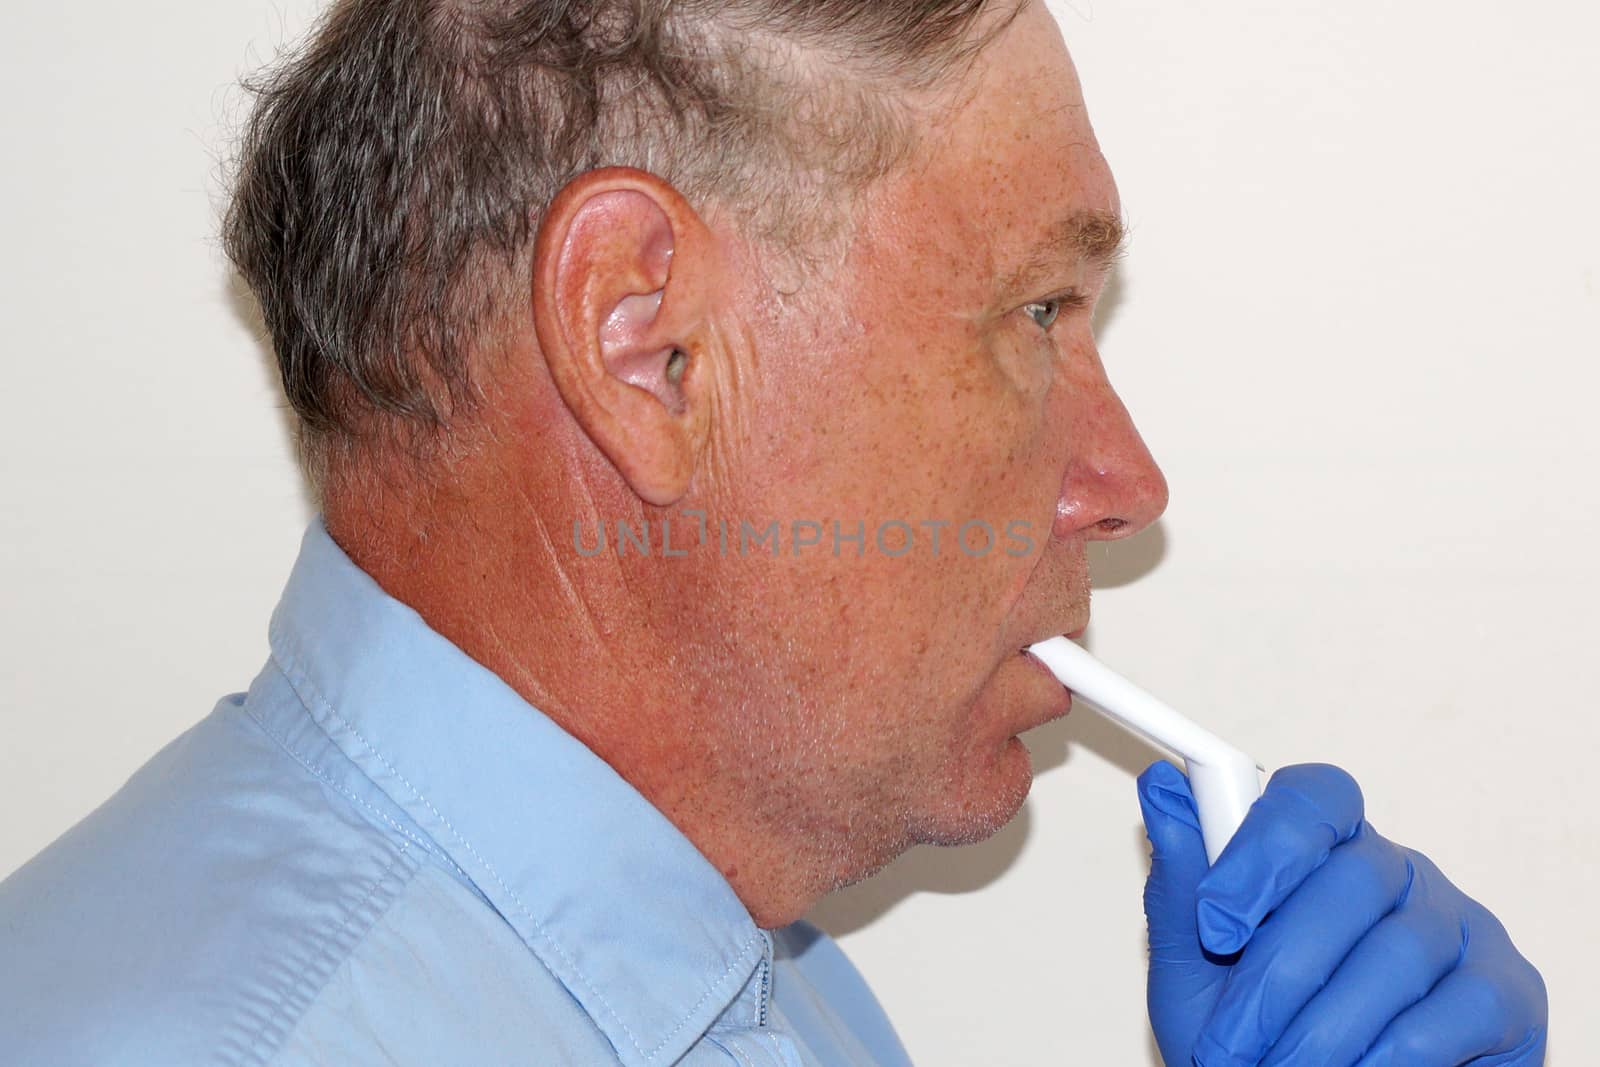 old man breathing through an inhaler, portrait close up